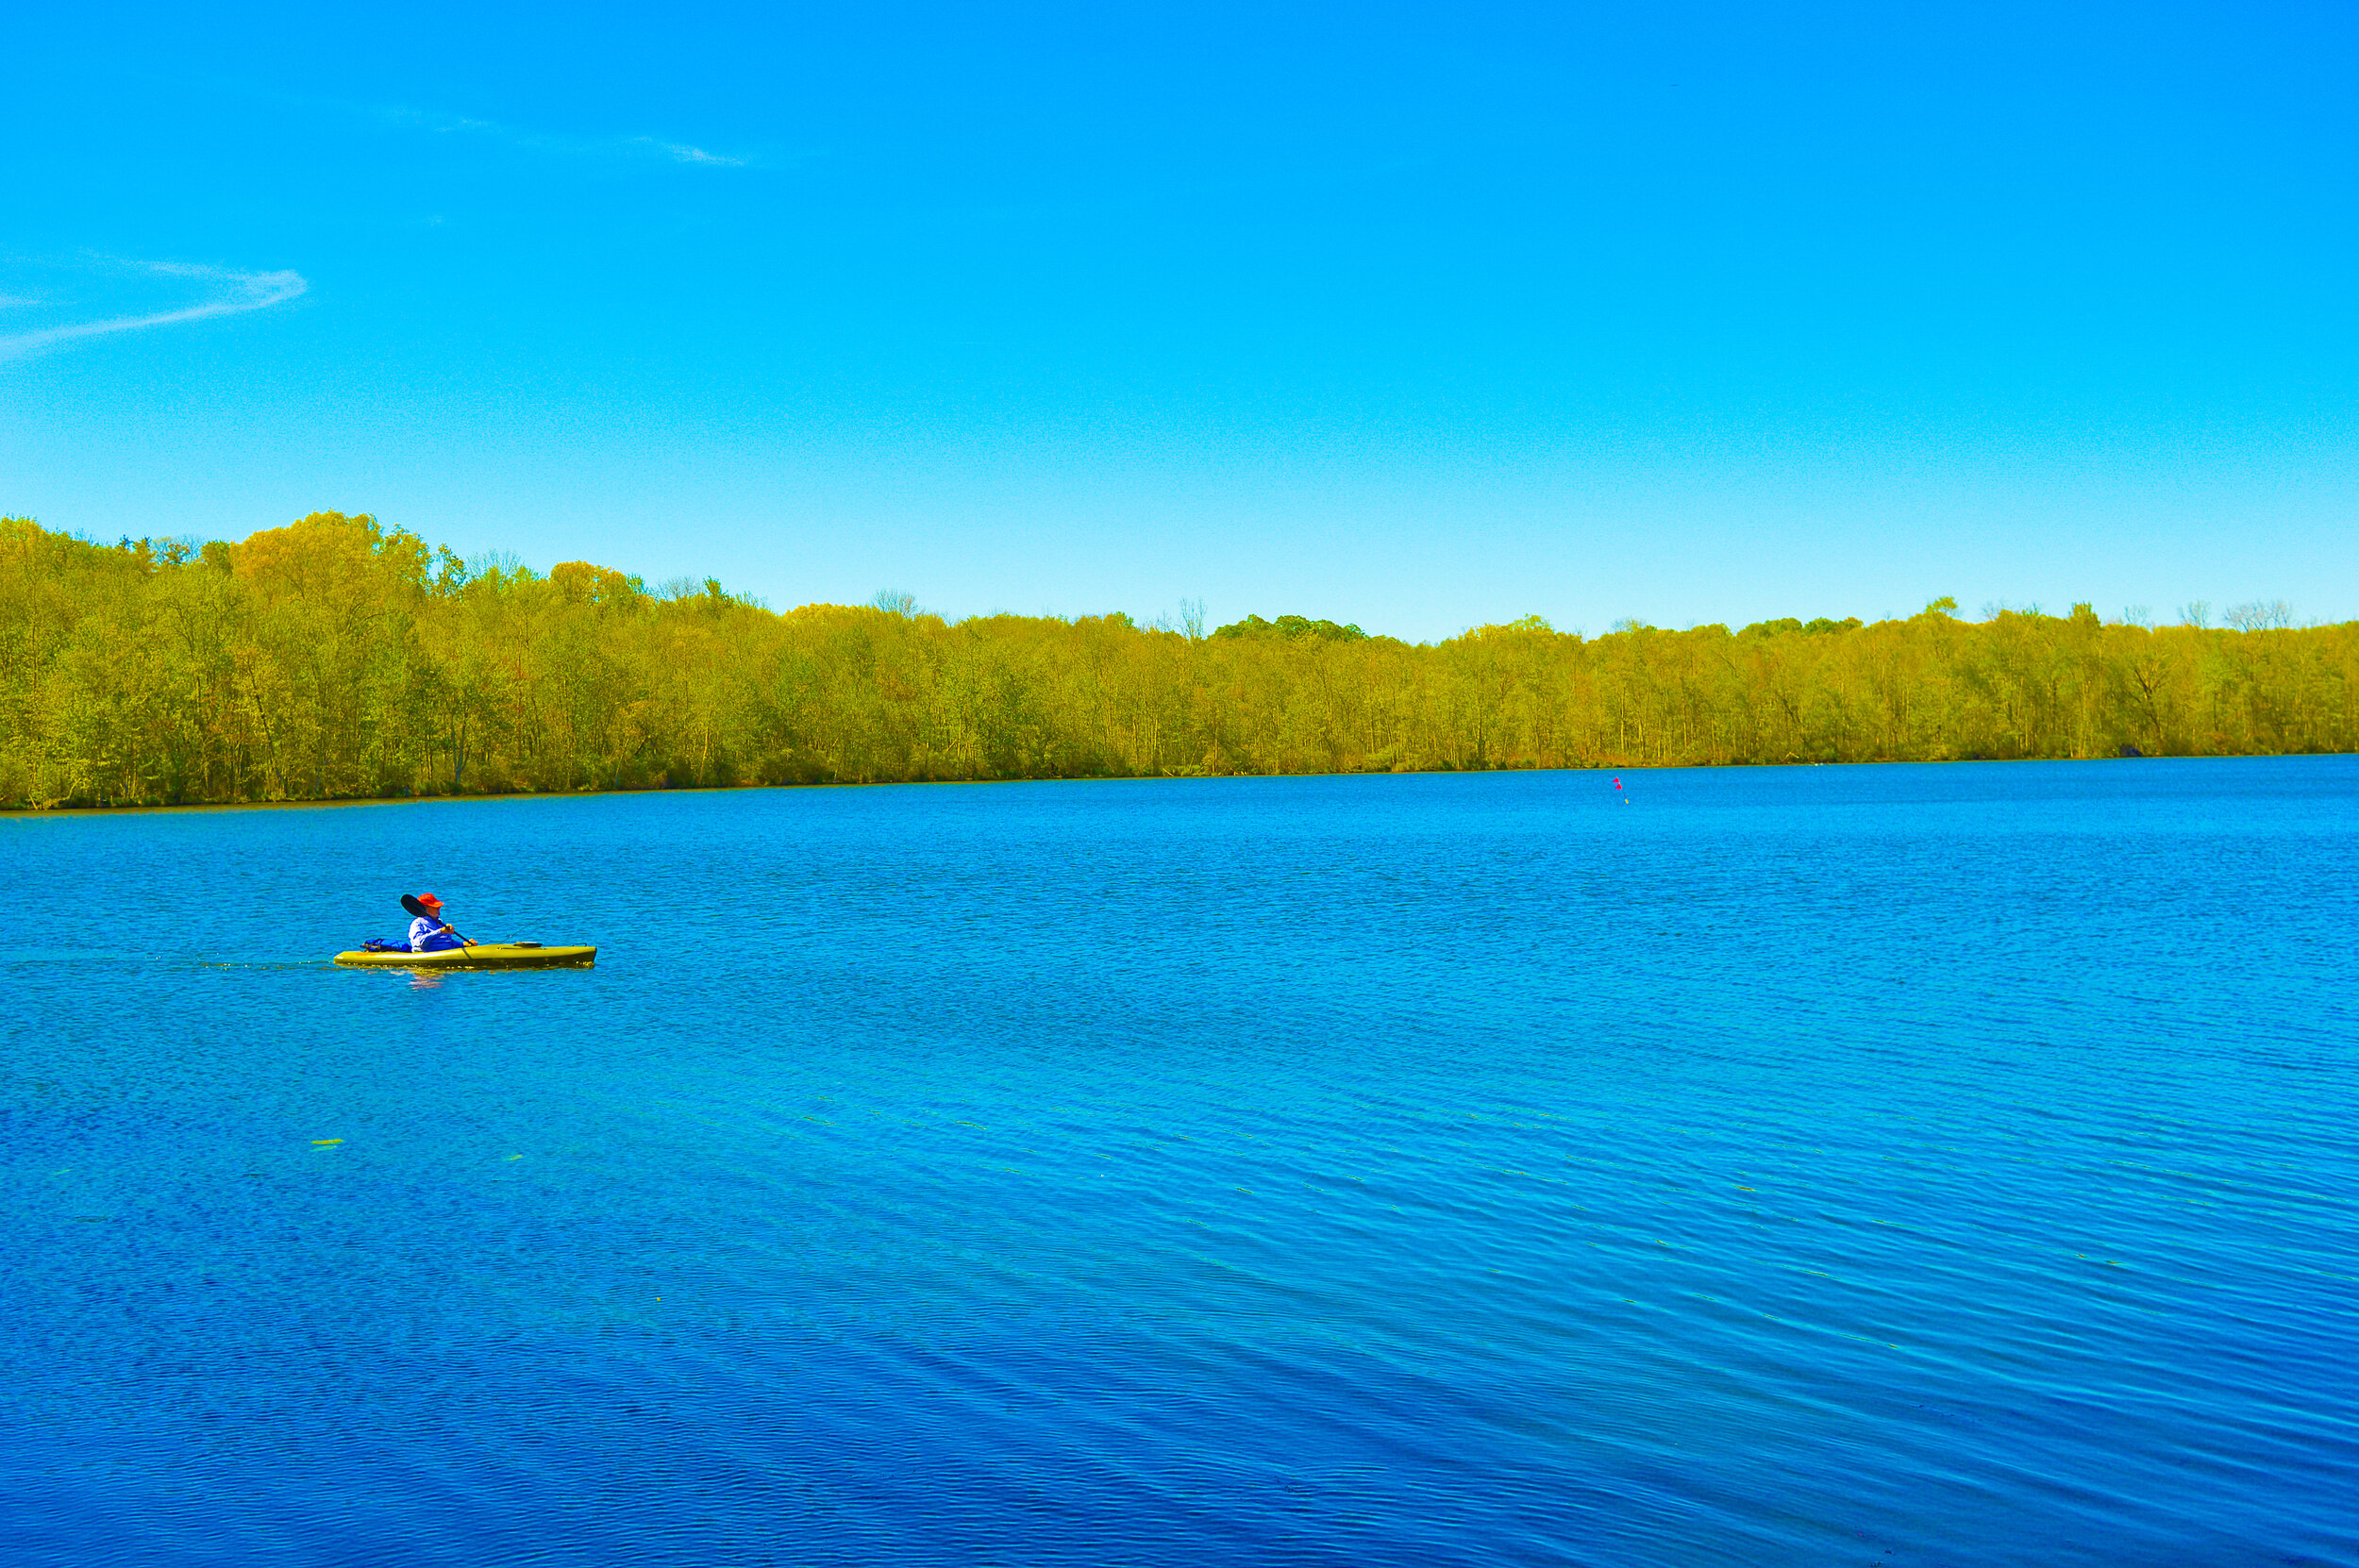 Canoe Man on Blue Lake